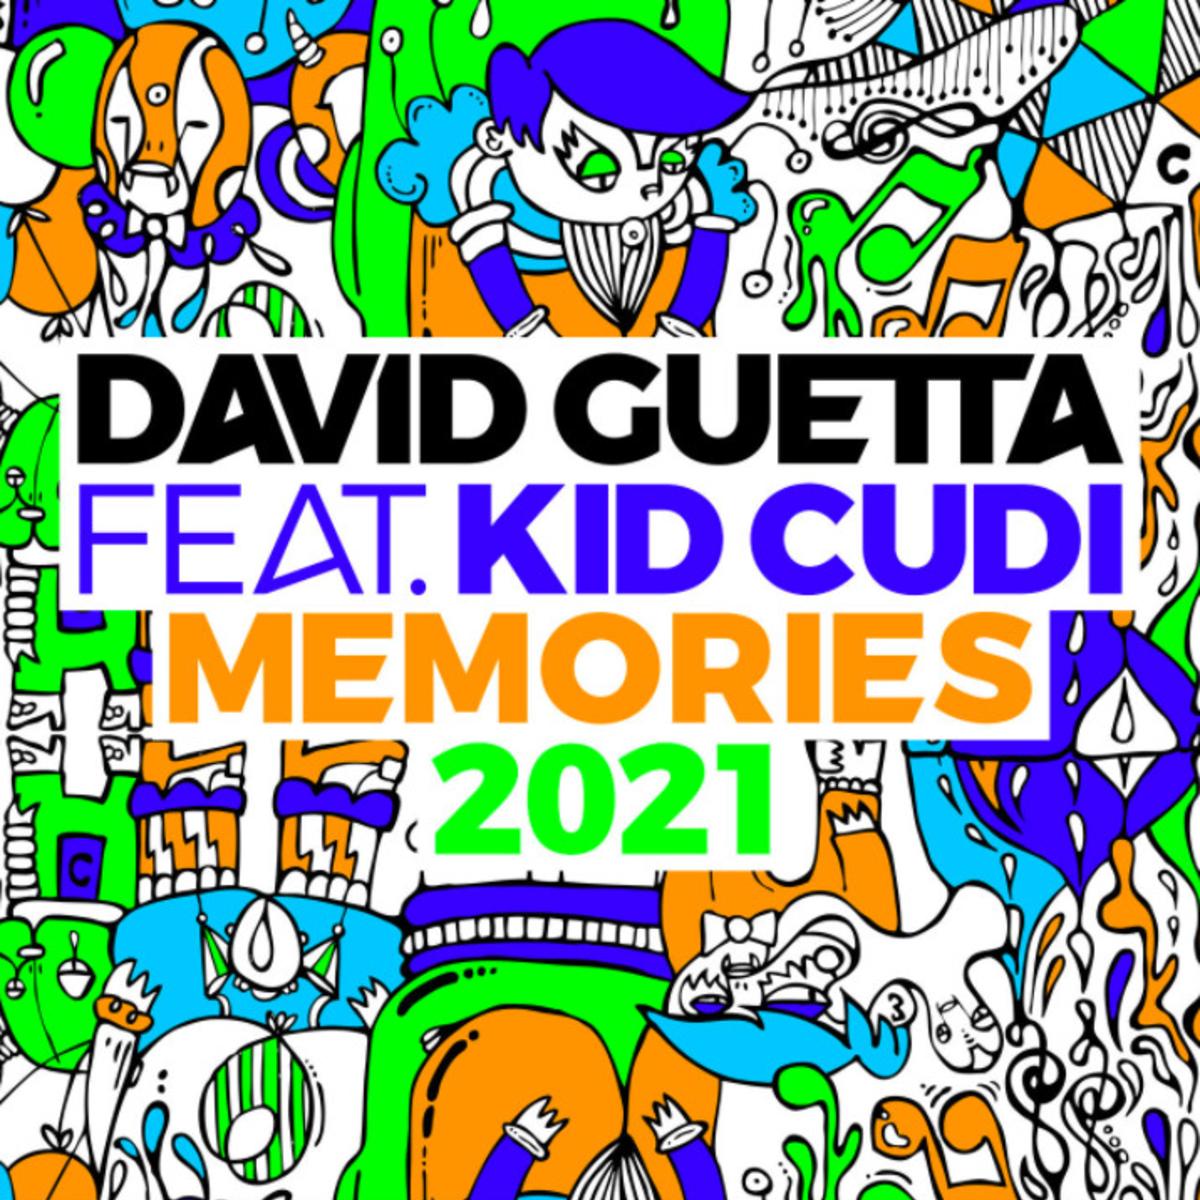 David Guetta - Memories Feat. Kid Cudi (2021 remix) 1